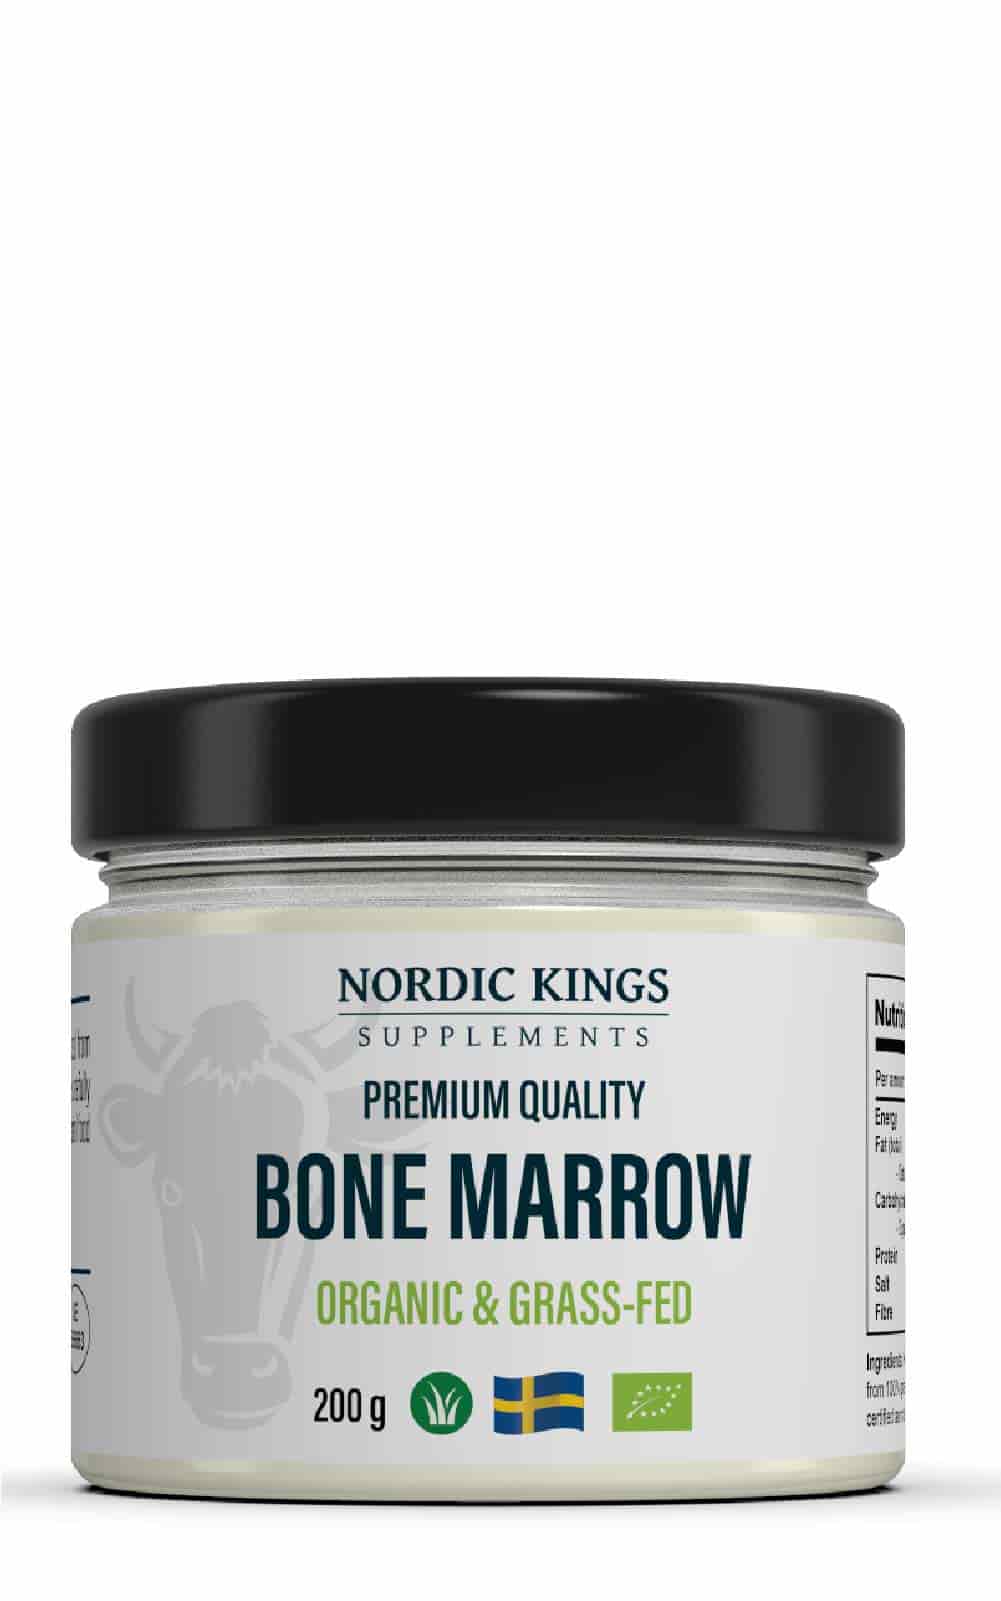 Buy Nordic Kings Organic Beef Bone Marrow Fat at LiveHelfi